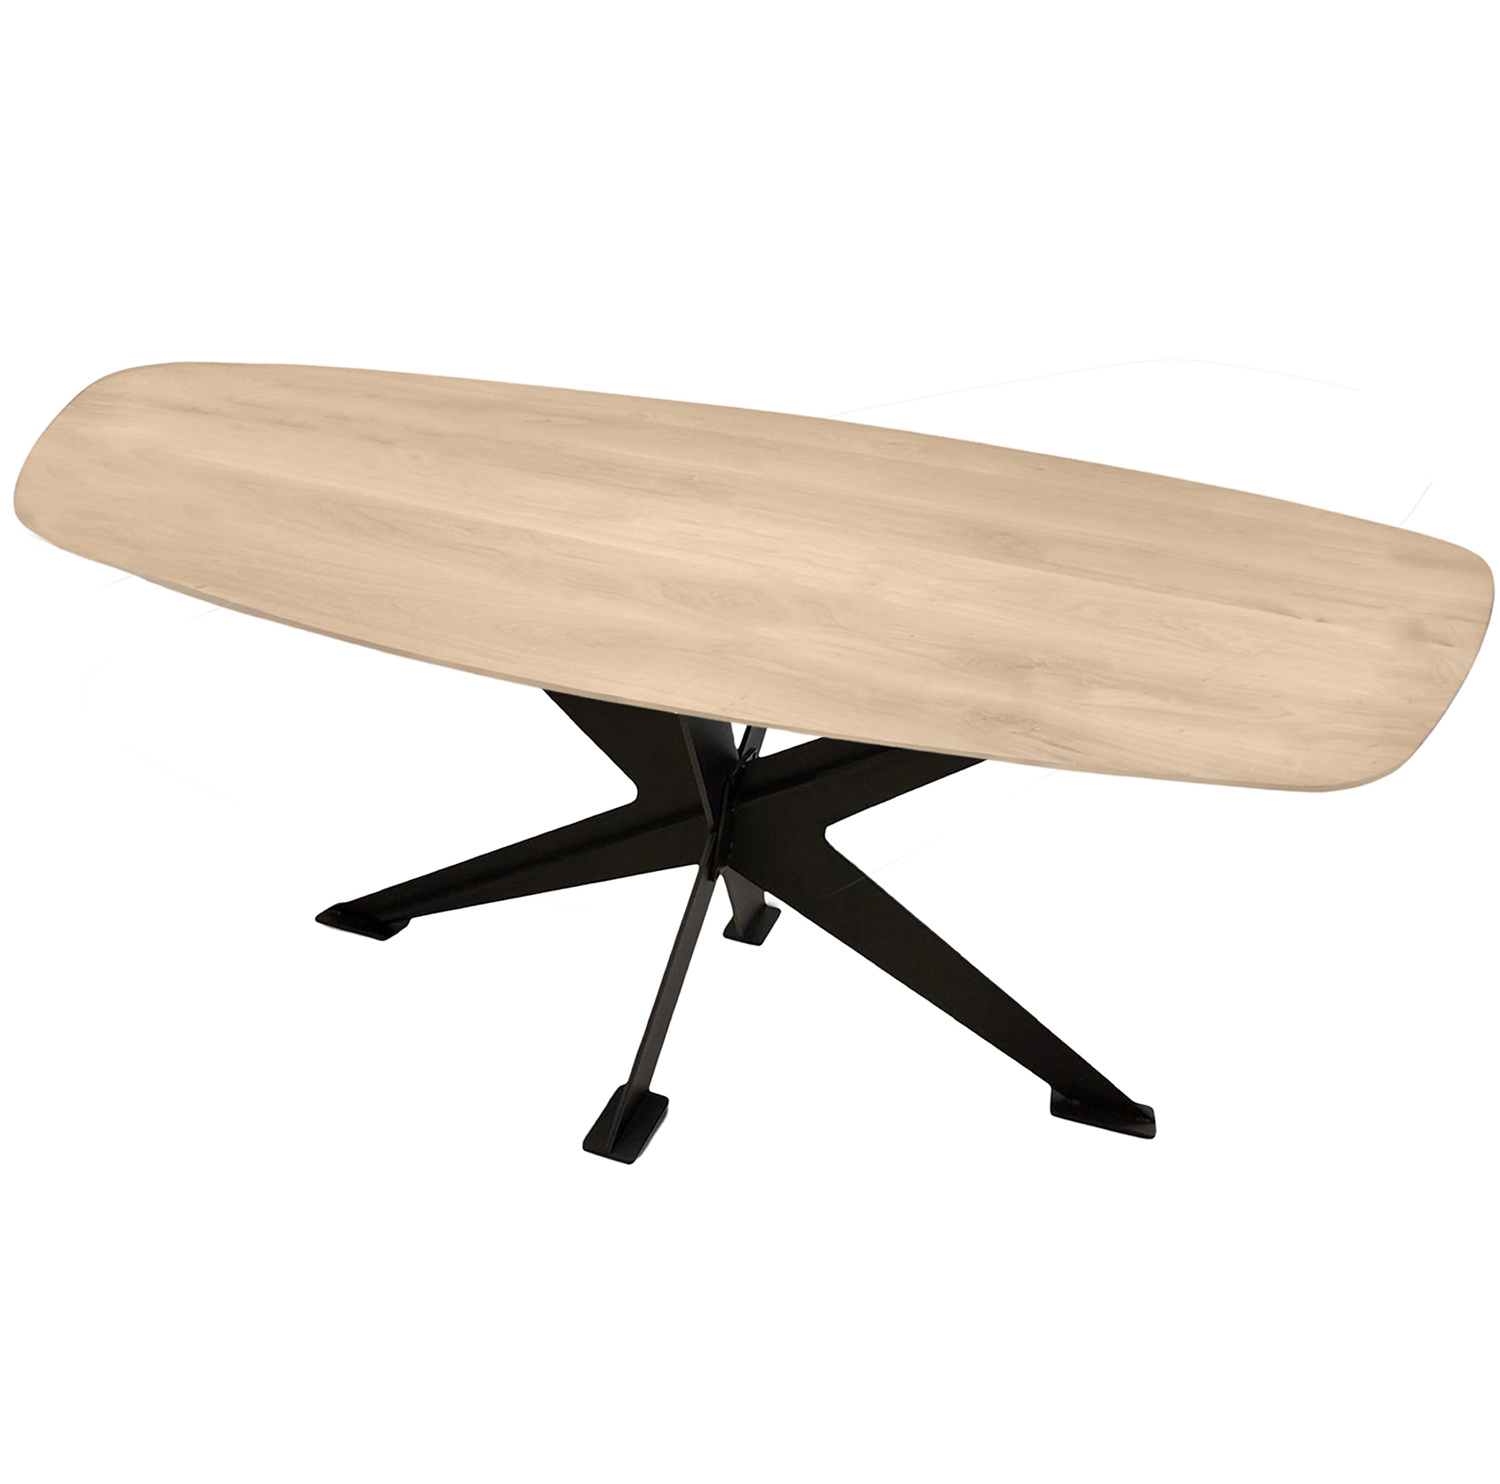  Tischplatte Eiche dänisch-oval - 2,5 cm dick - Eichenholz A-Qualität - Bootsform Eiche Tischplatte massiv - HF 8-12%